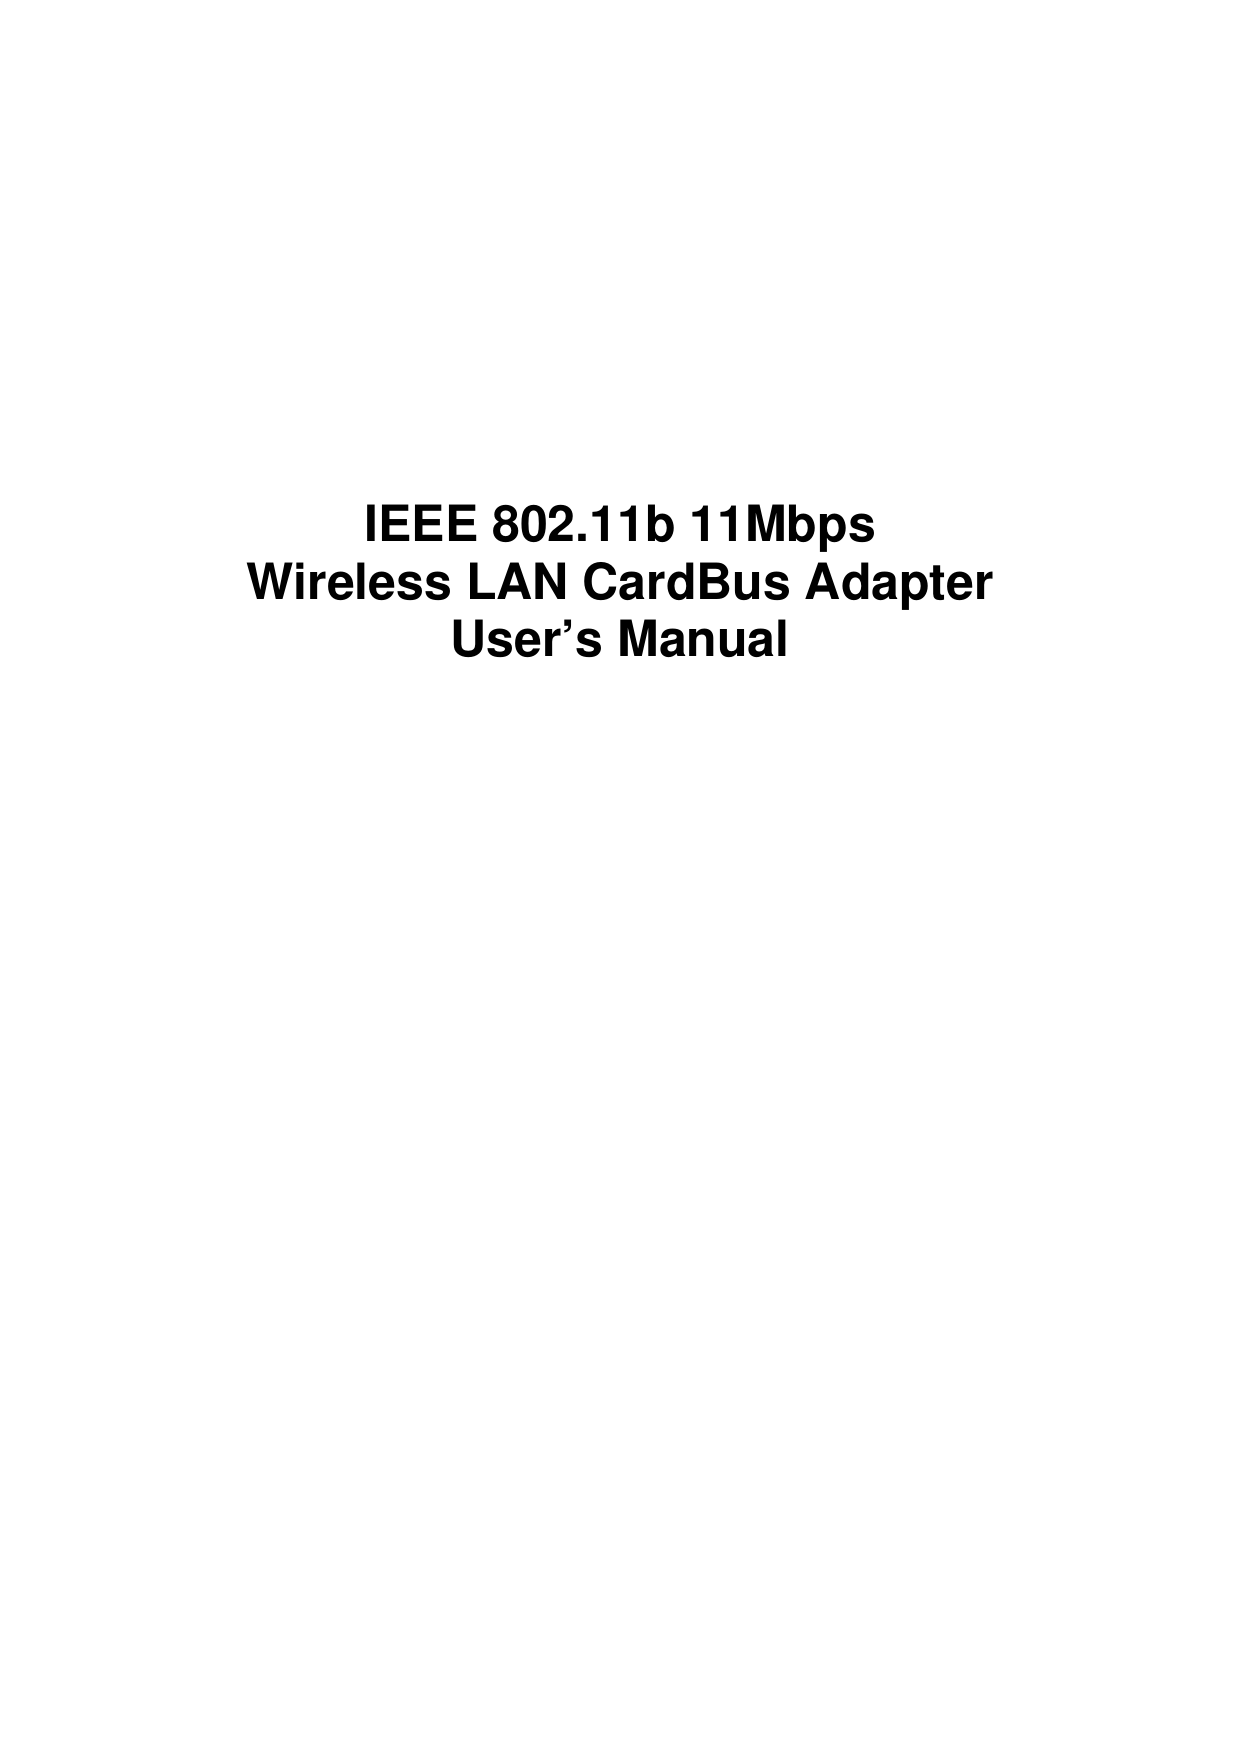       IEEE 802.11b 11Mbps Wireless LAN CardBus Adapter User’s Manual 